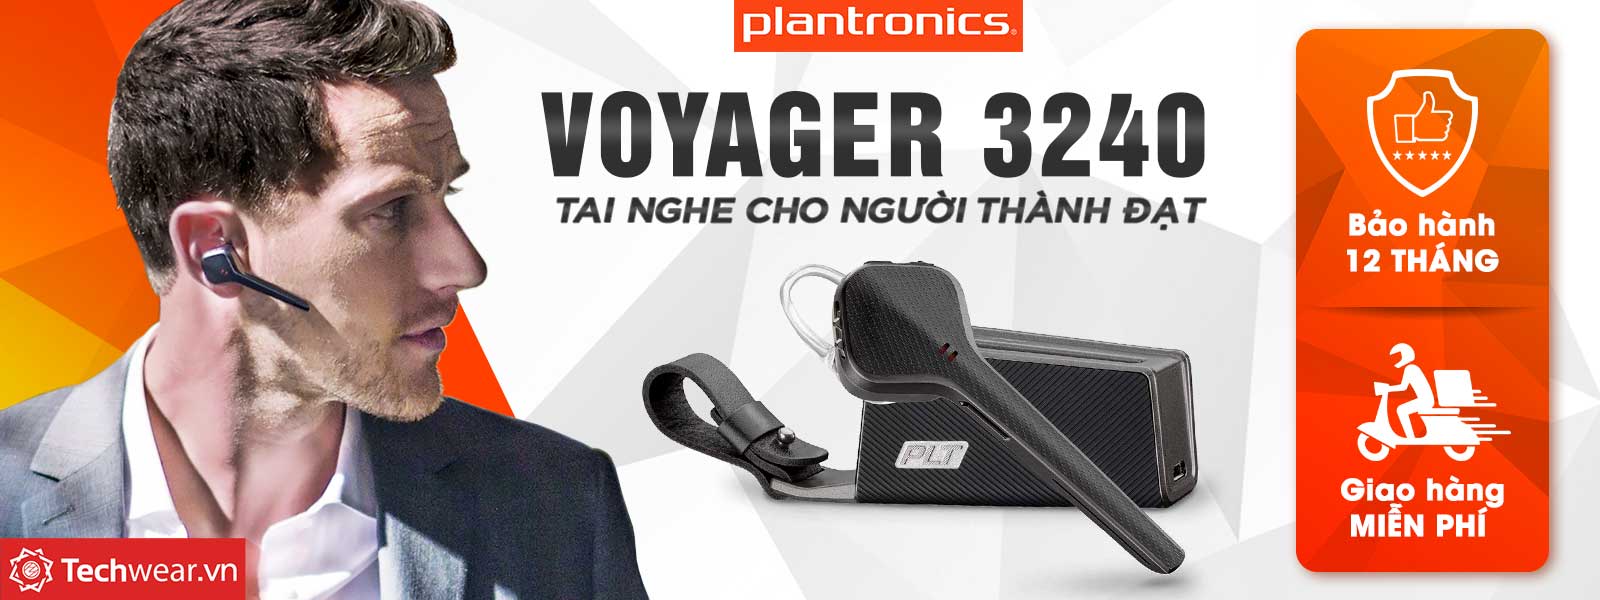 Plantronics Voyager 3240